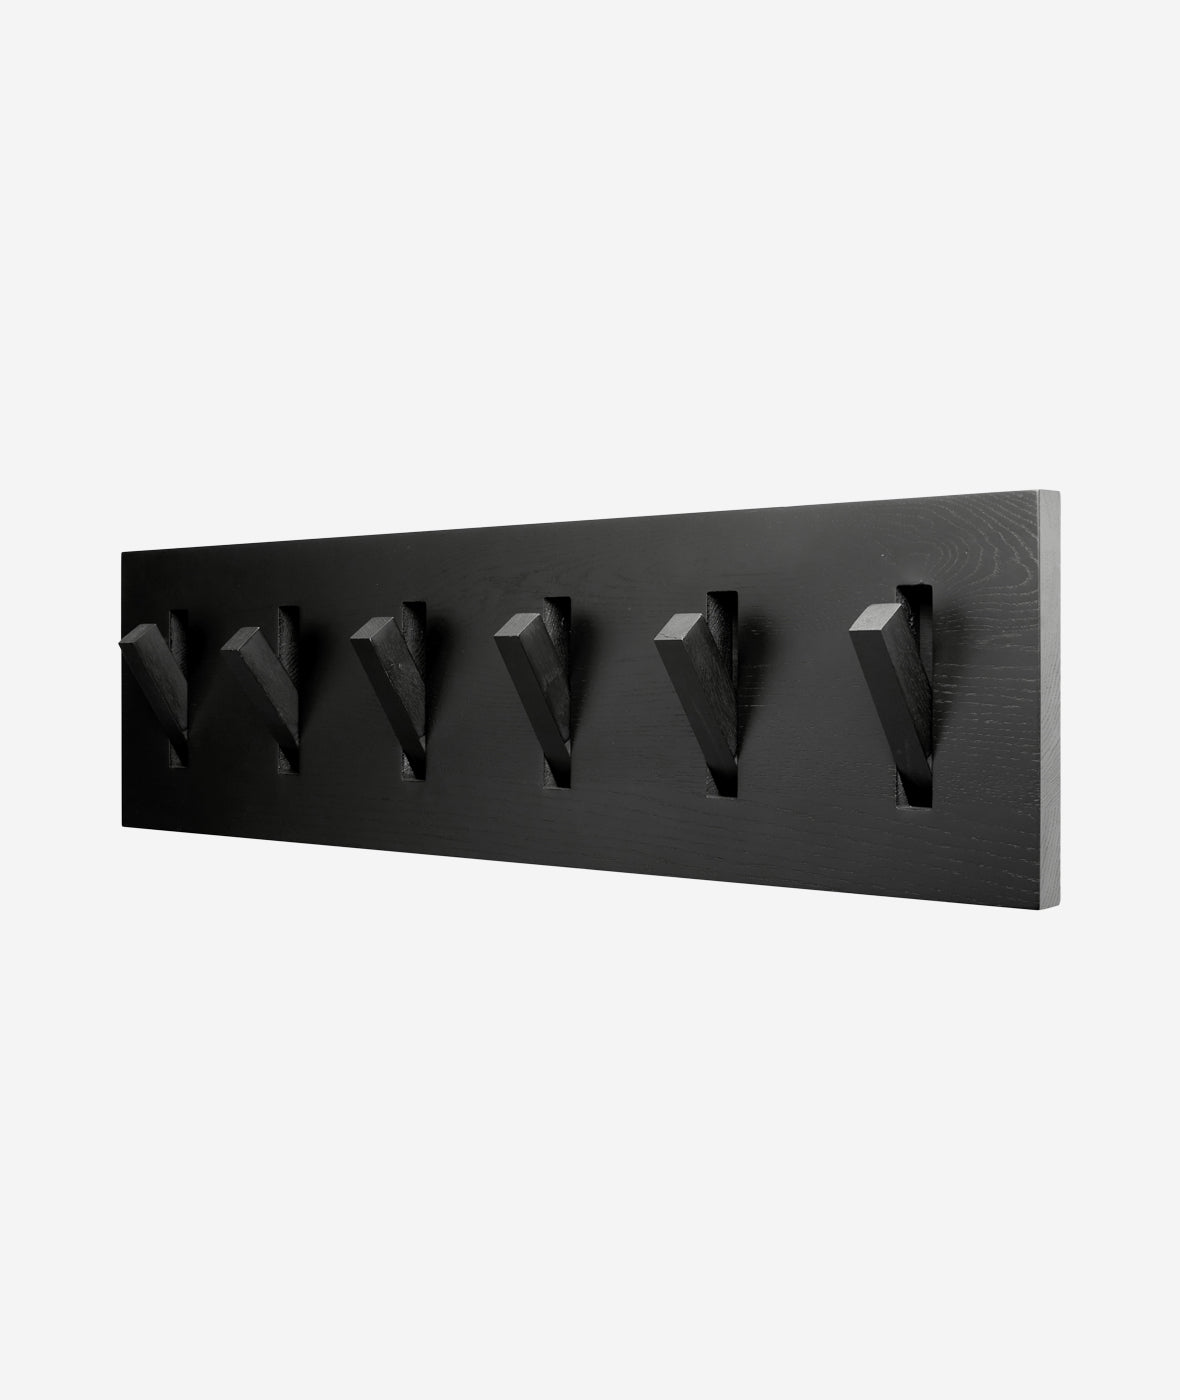 Utilitile Wall Hanger - More Options